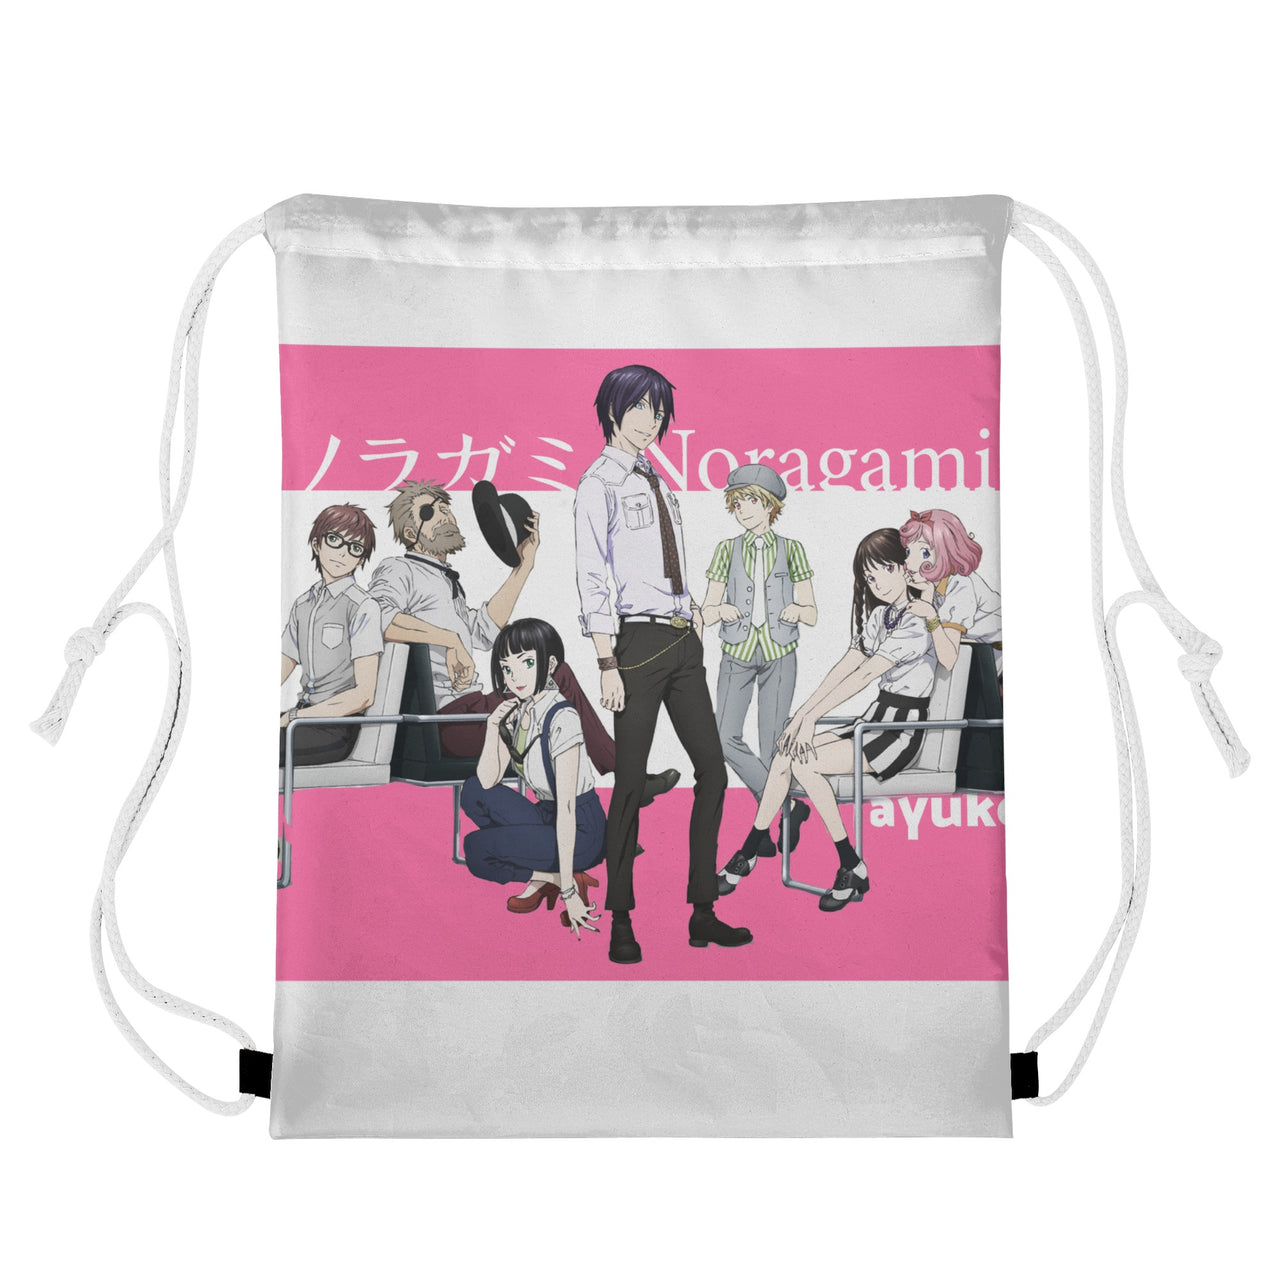 Noragami Anime Drawstring Bag